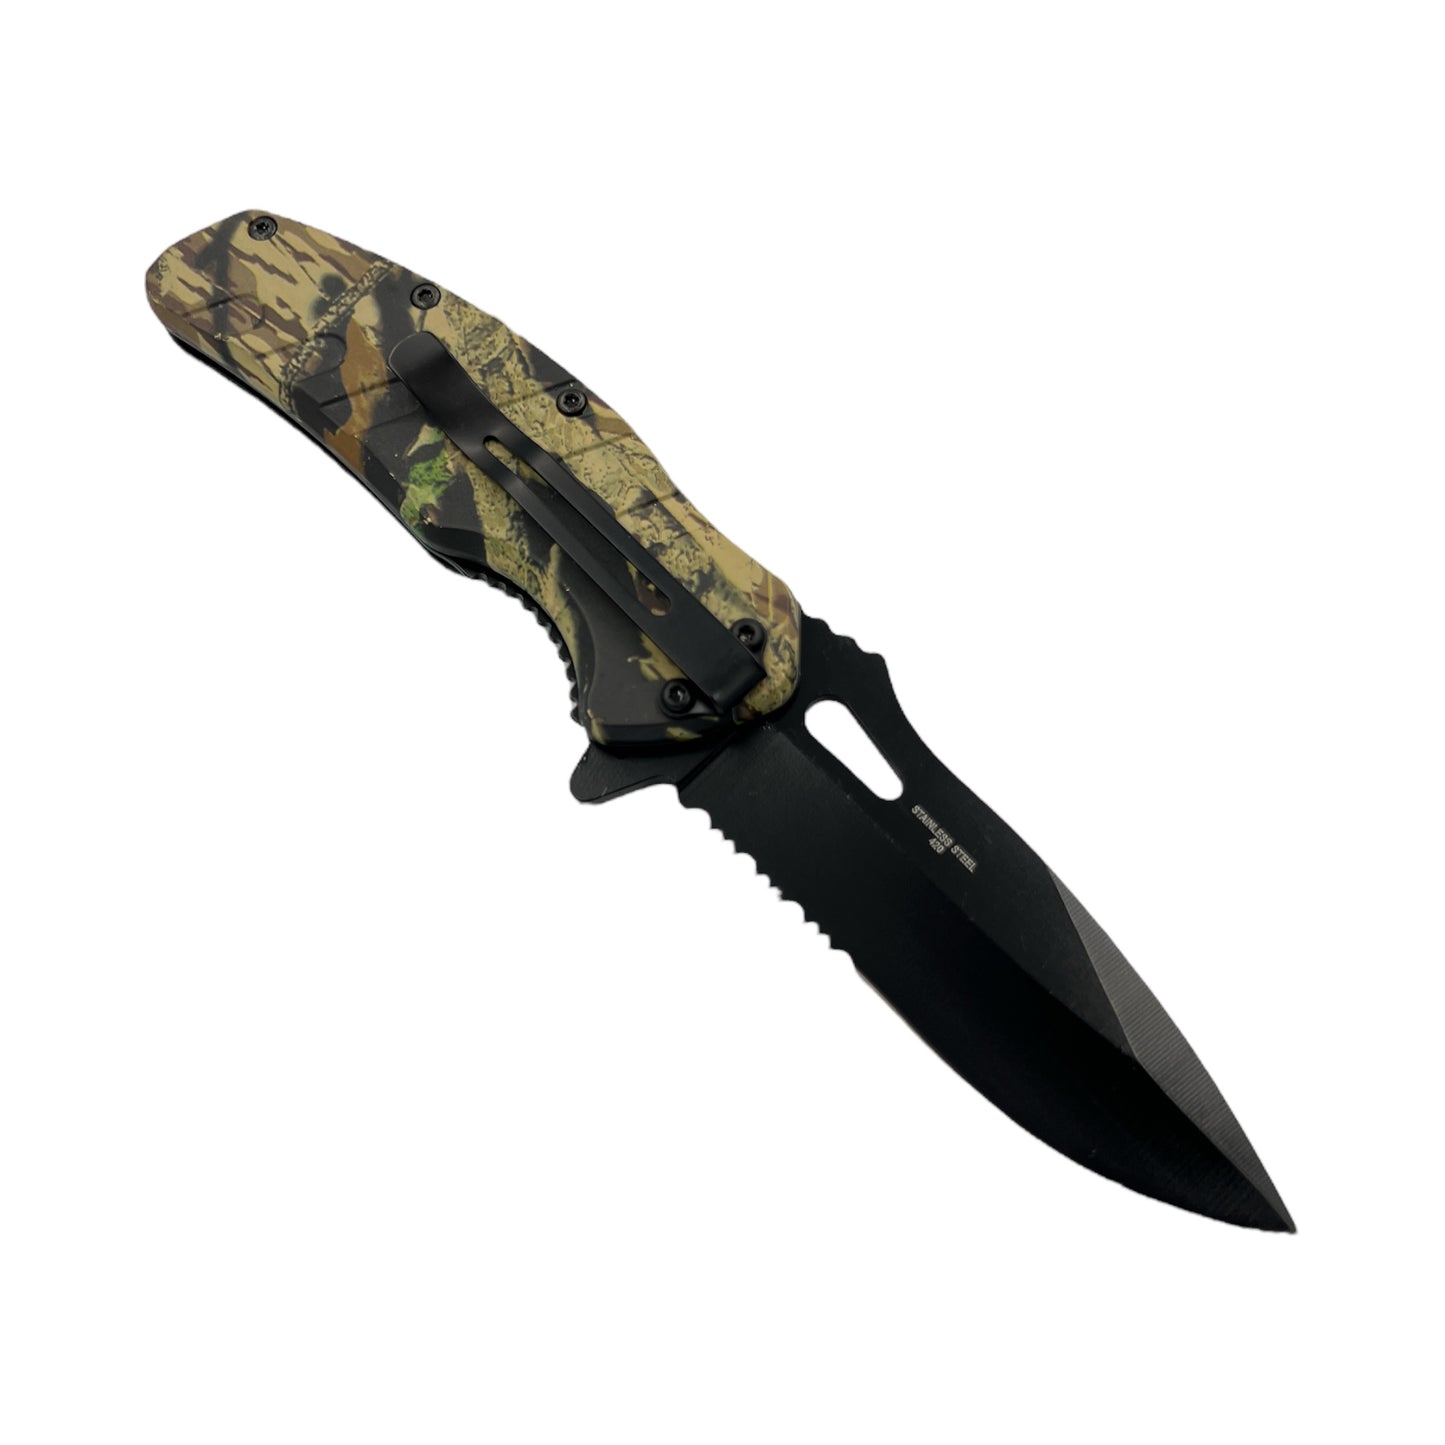 Diamondback Hunters Knife - 4inch (10cm) Blade